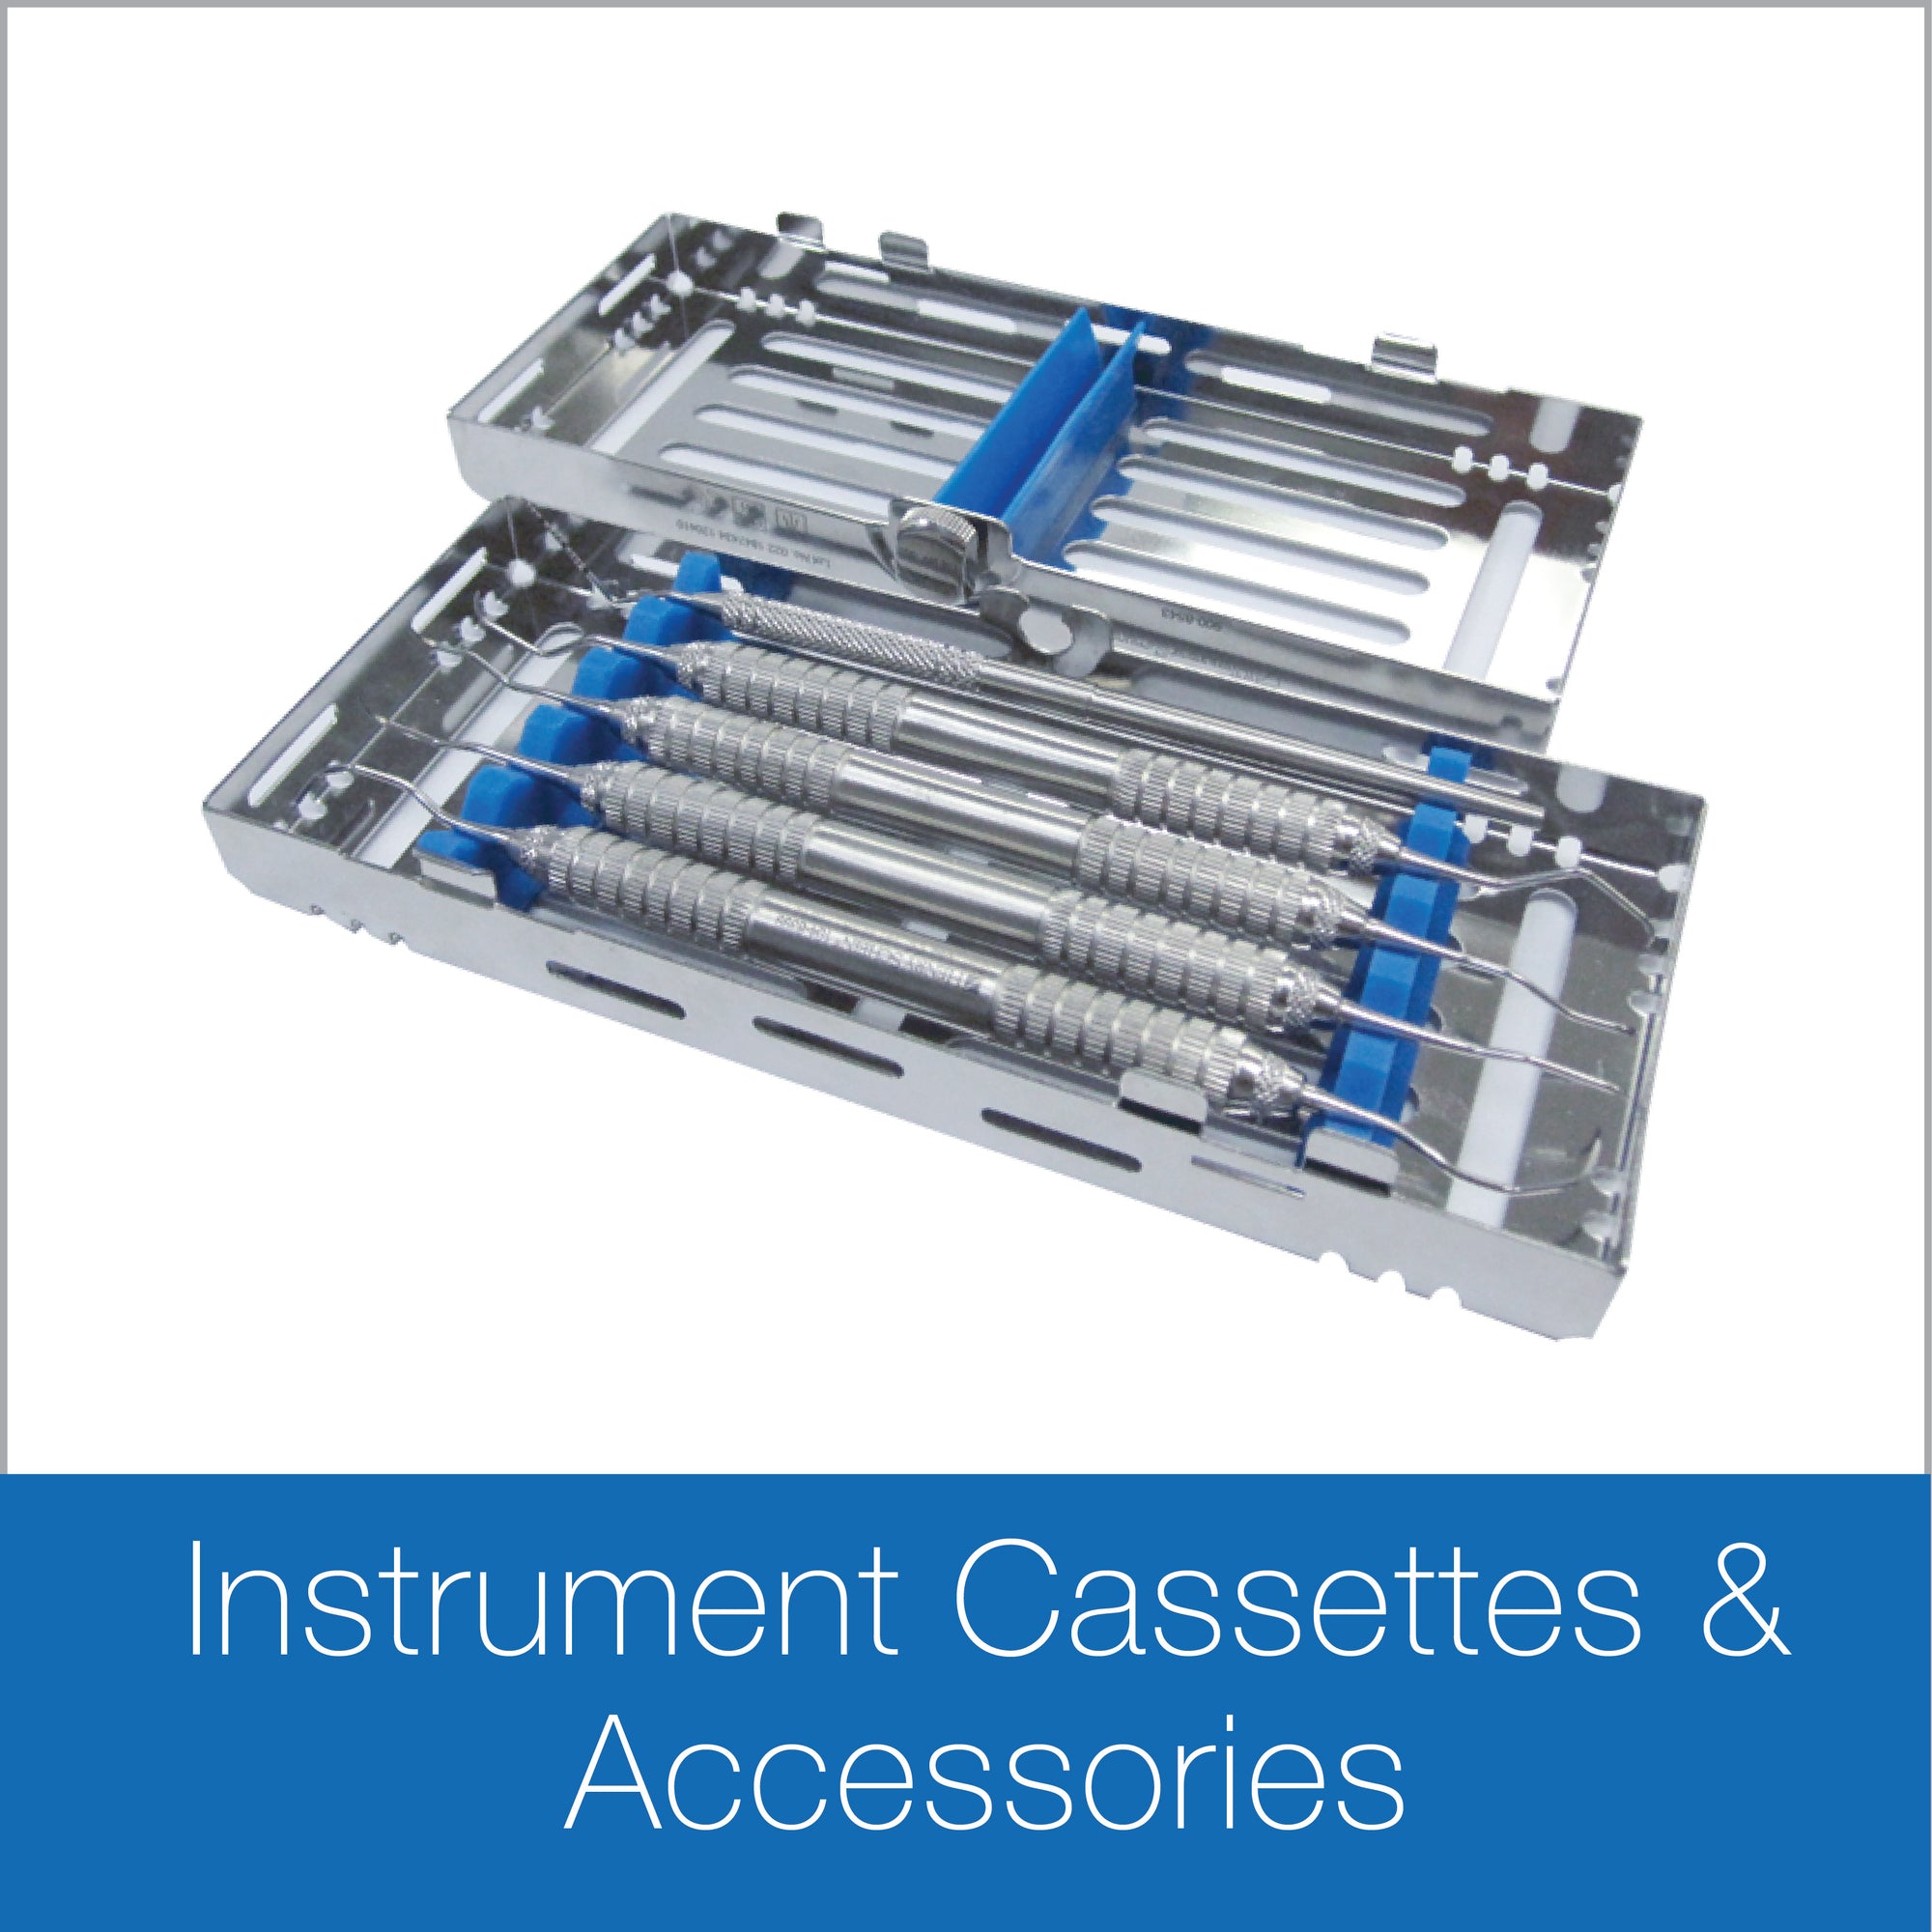 Instrument Cassettes & Accessories